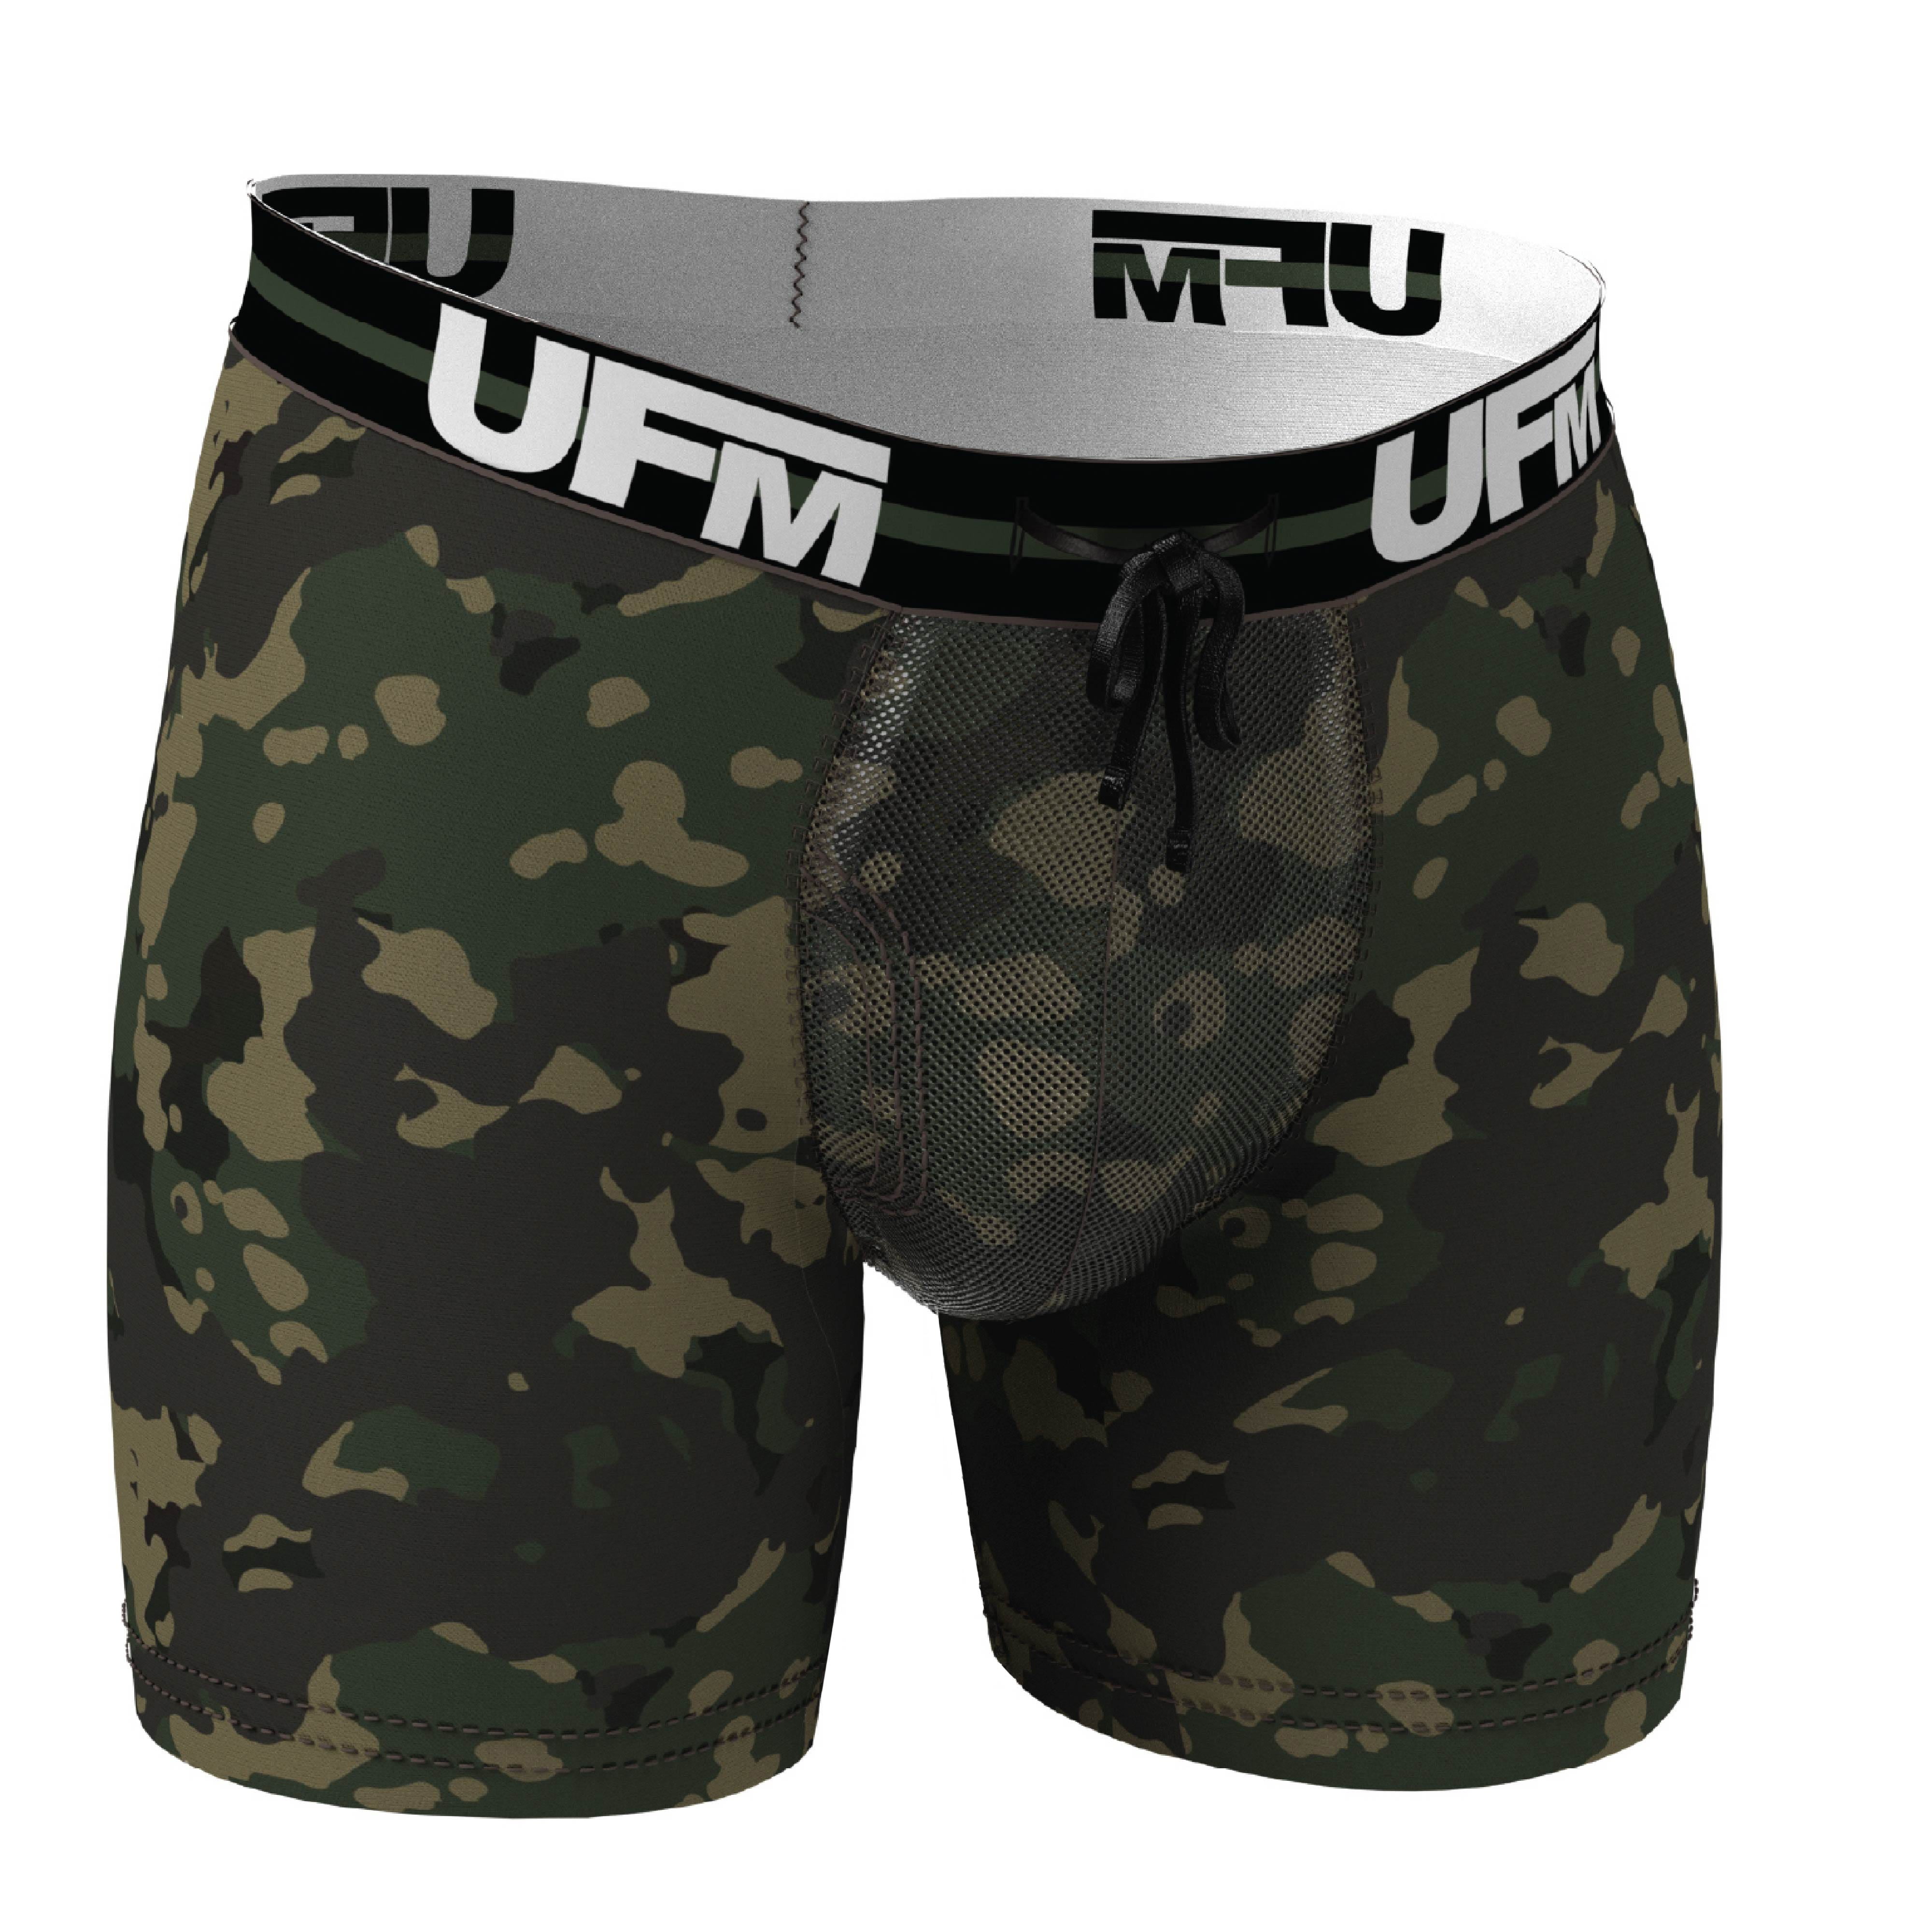 UFM 3.0 Underwear for Men Adjustable Boxer Brief 6 Royal